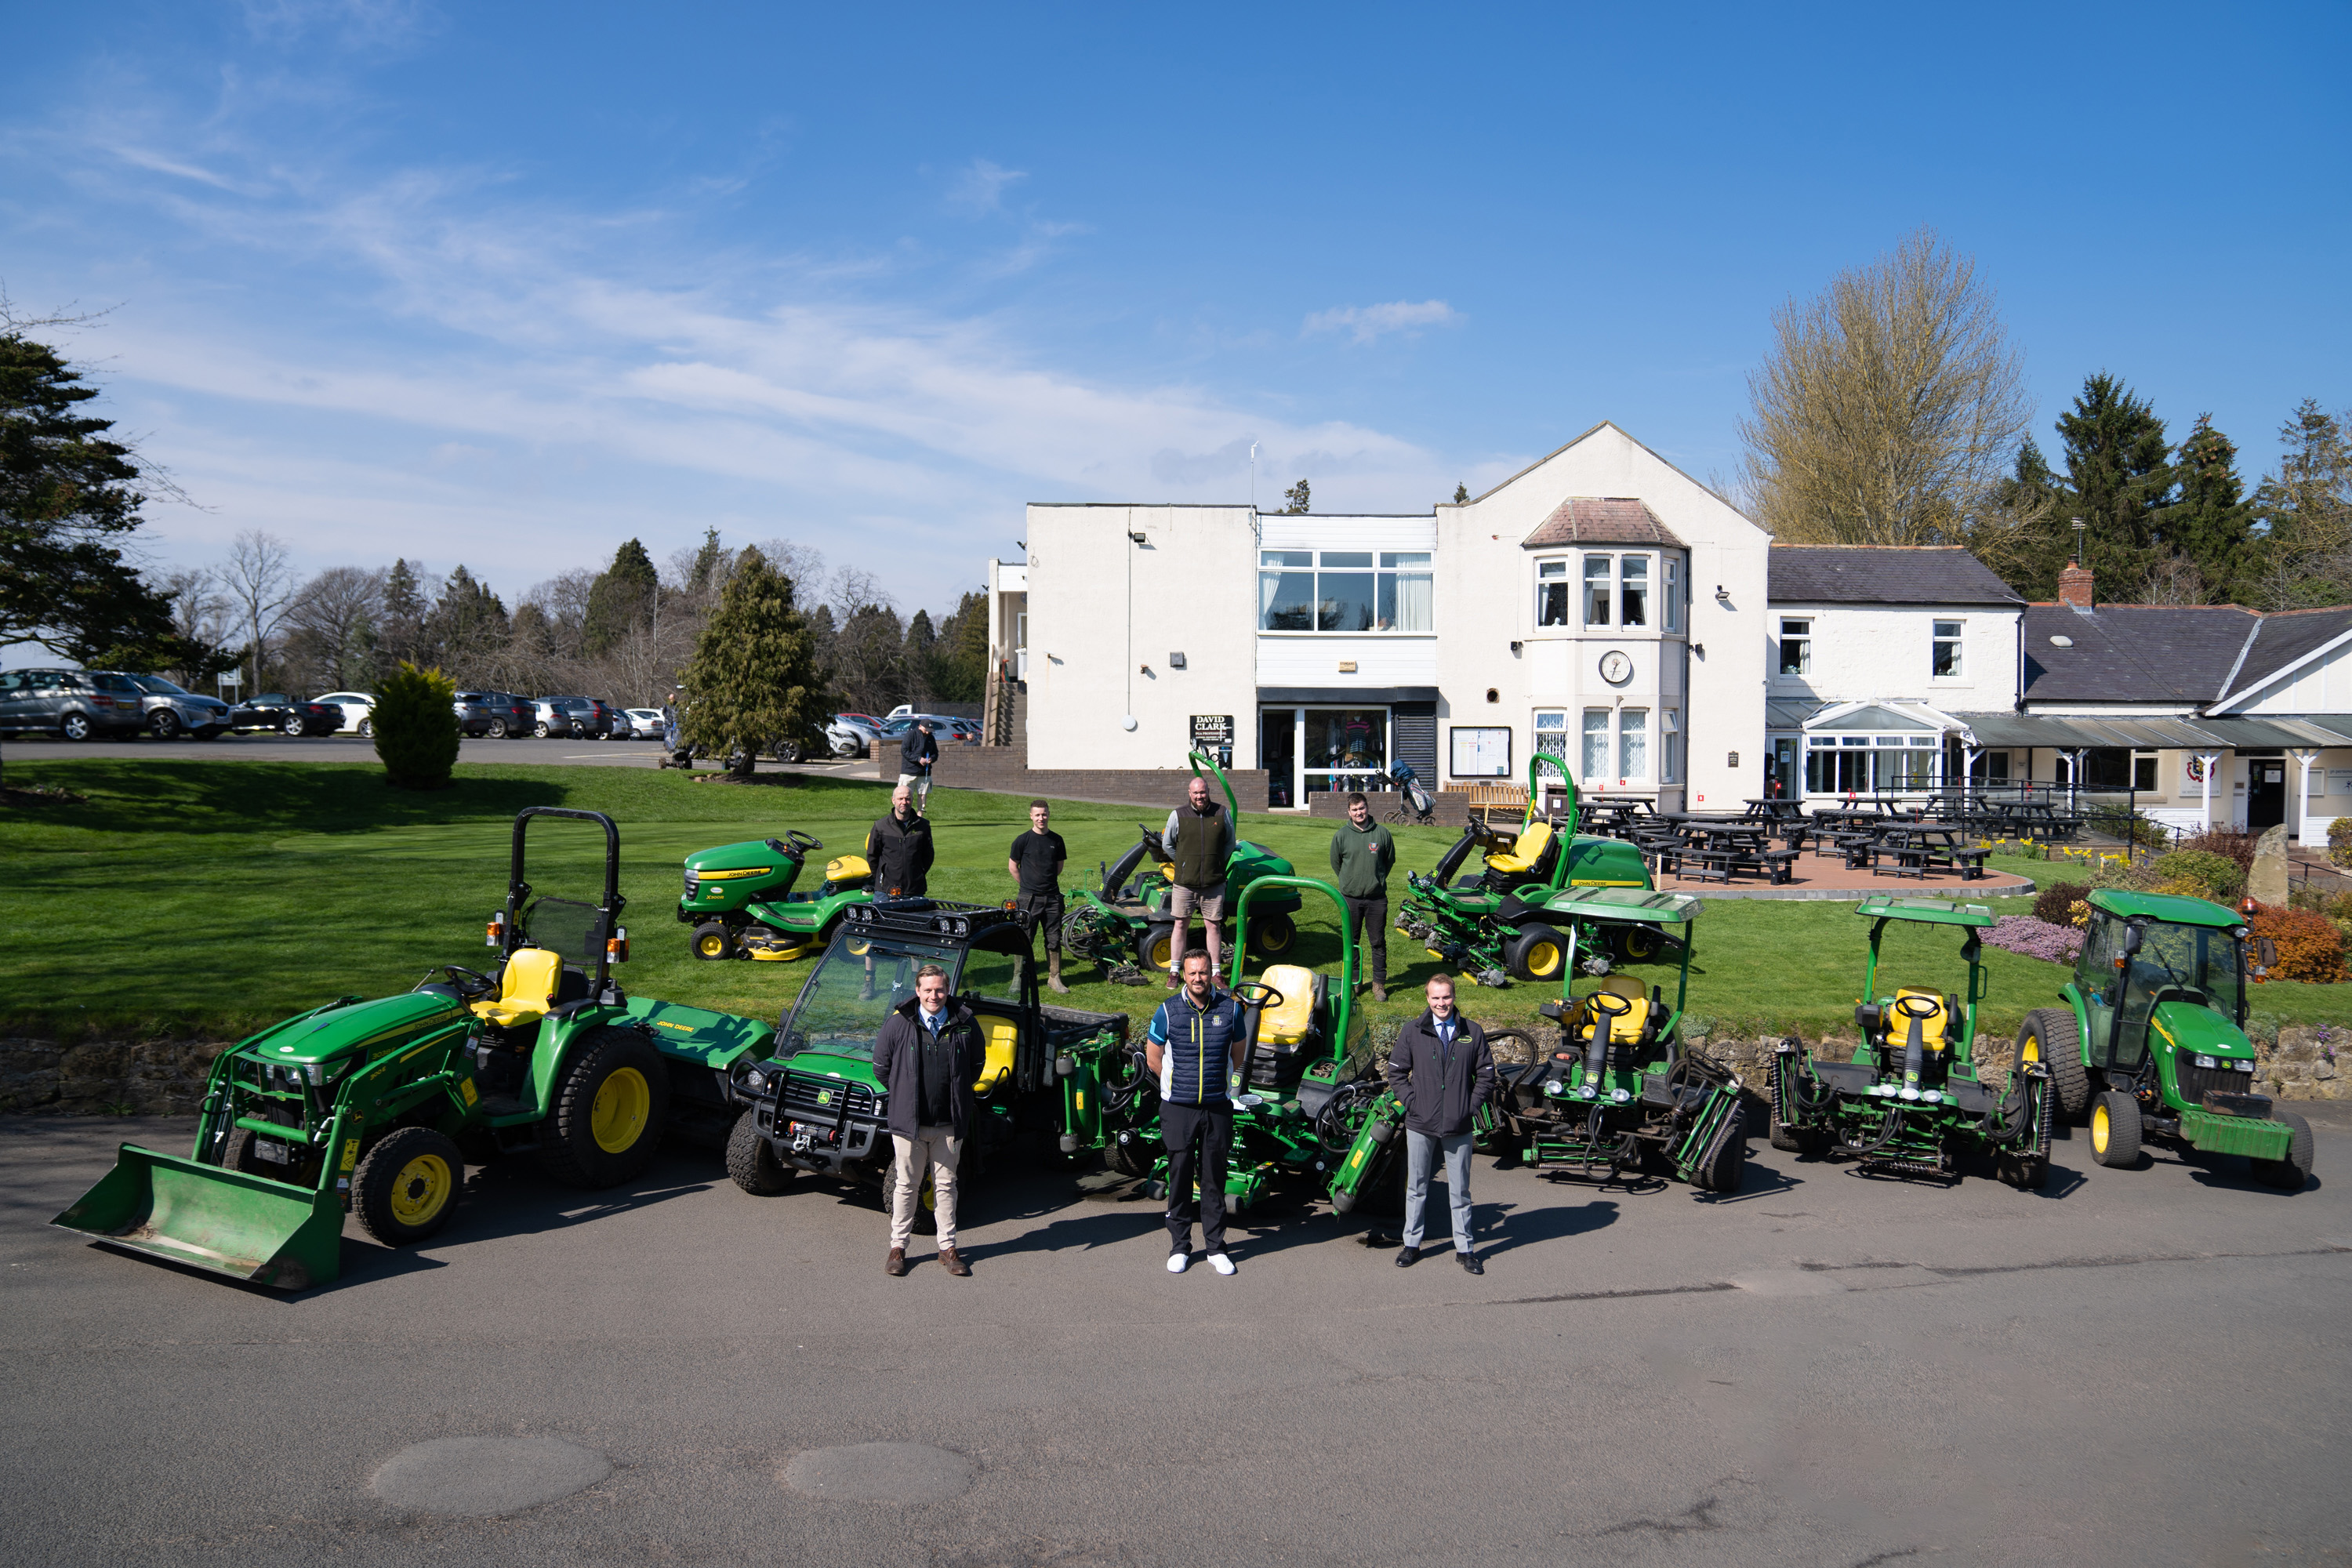 Morpeth Golf Club looks to the future with John Deere Golf Machinery